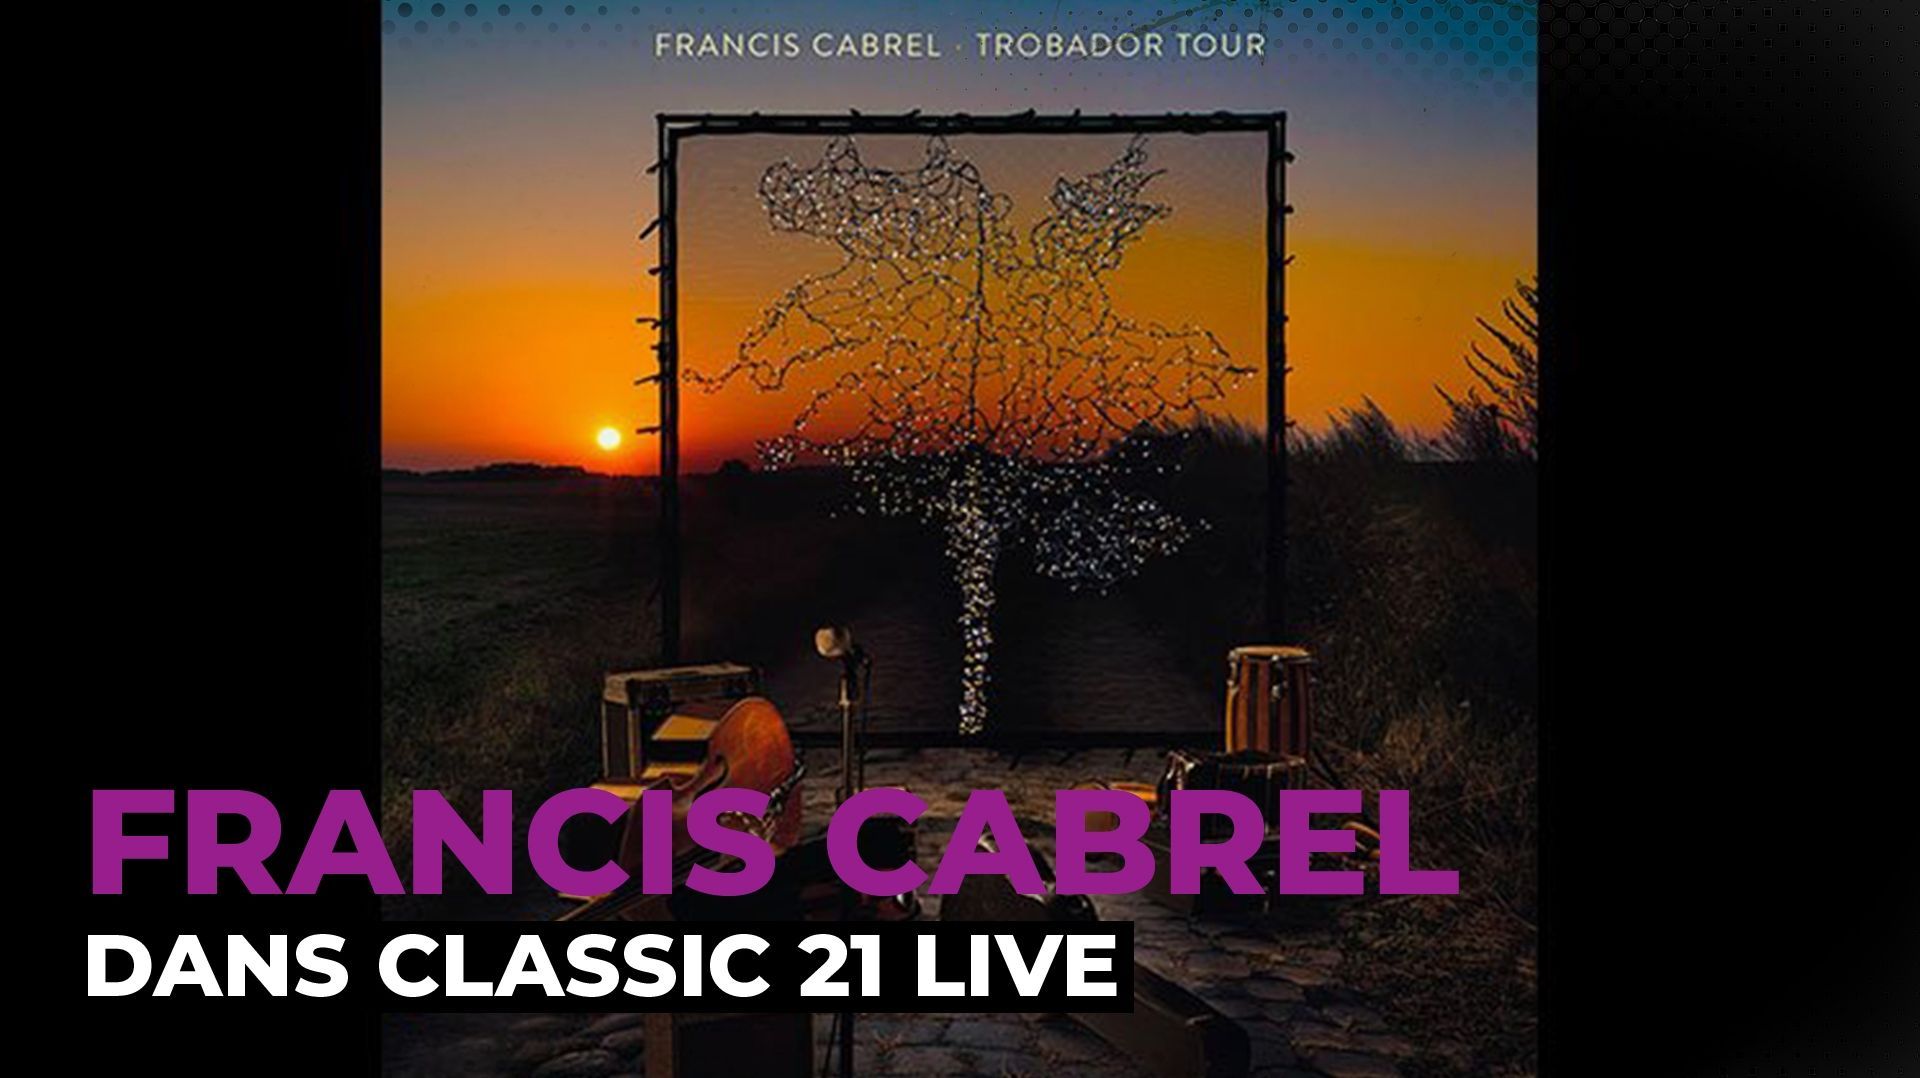 Francis Cabrel – Trobador Tour